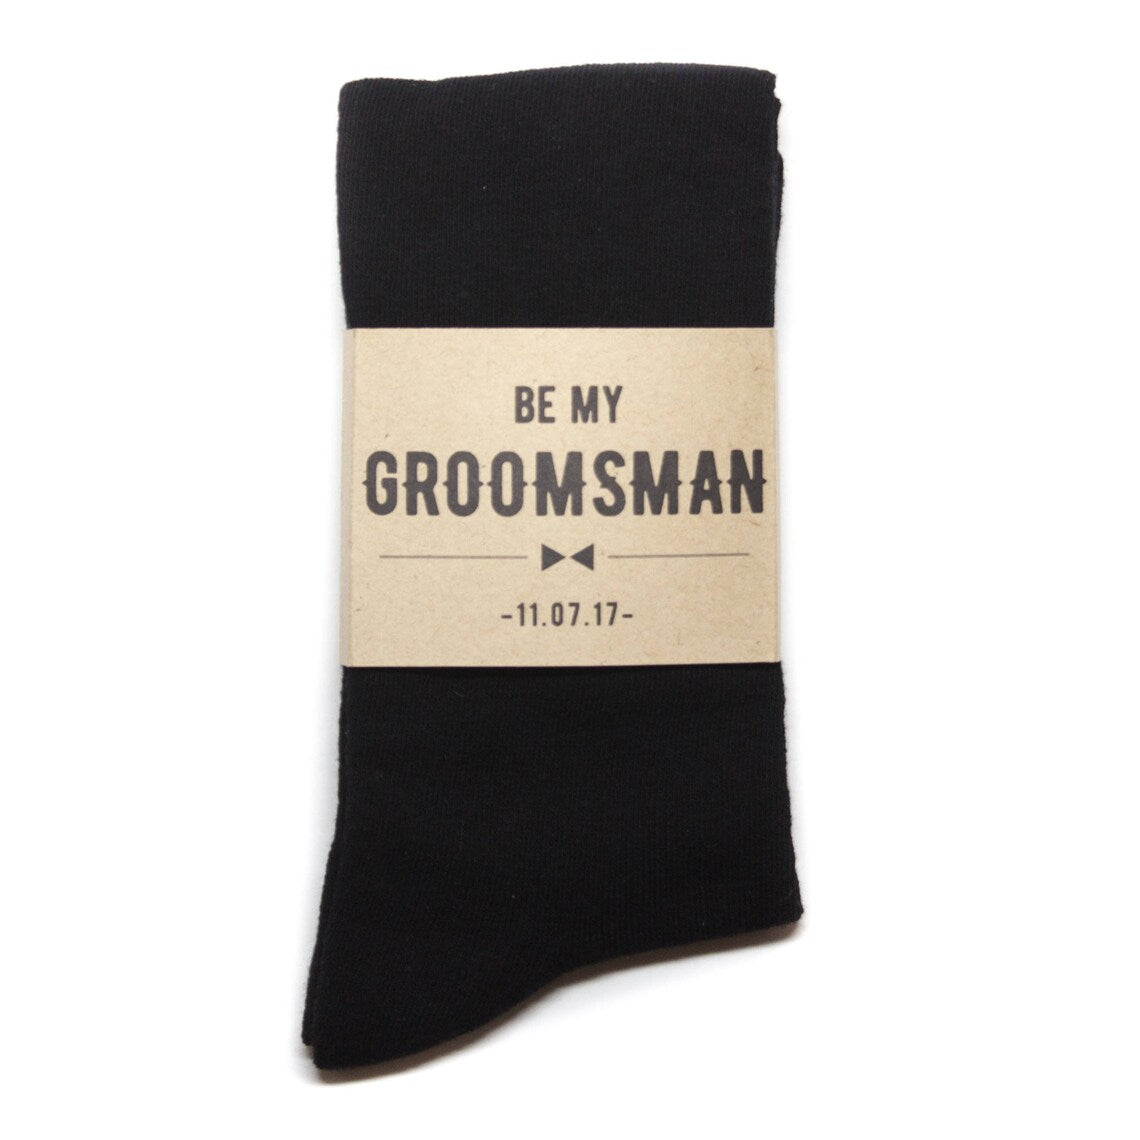 Groomsmen Socks, Bourbon and Kentucky Themed, Patty B'zz